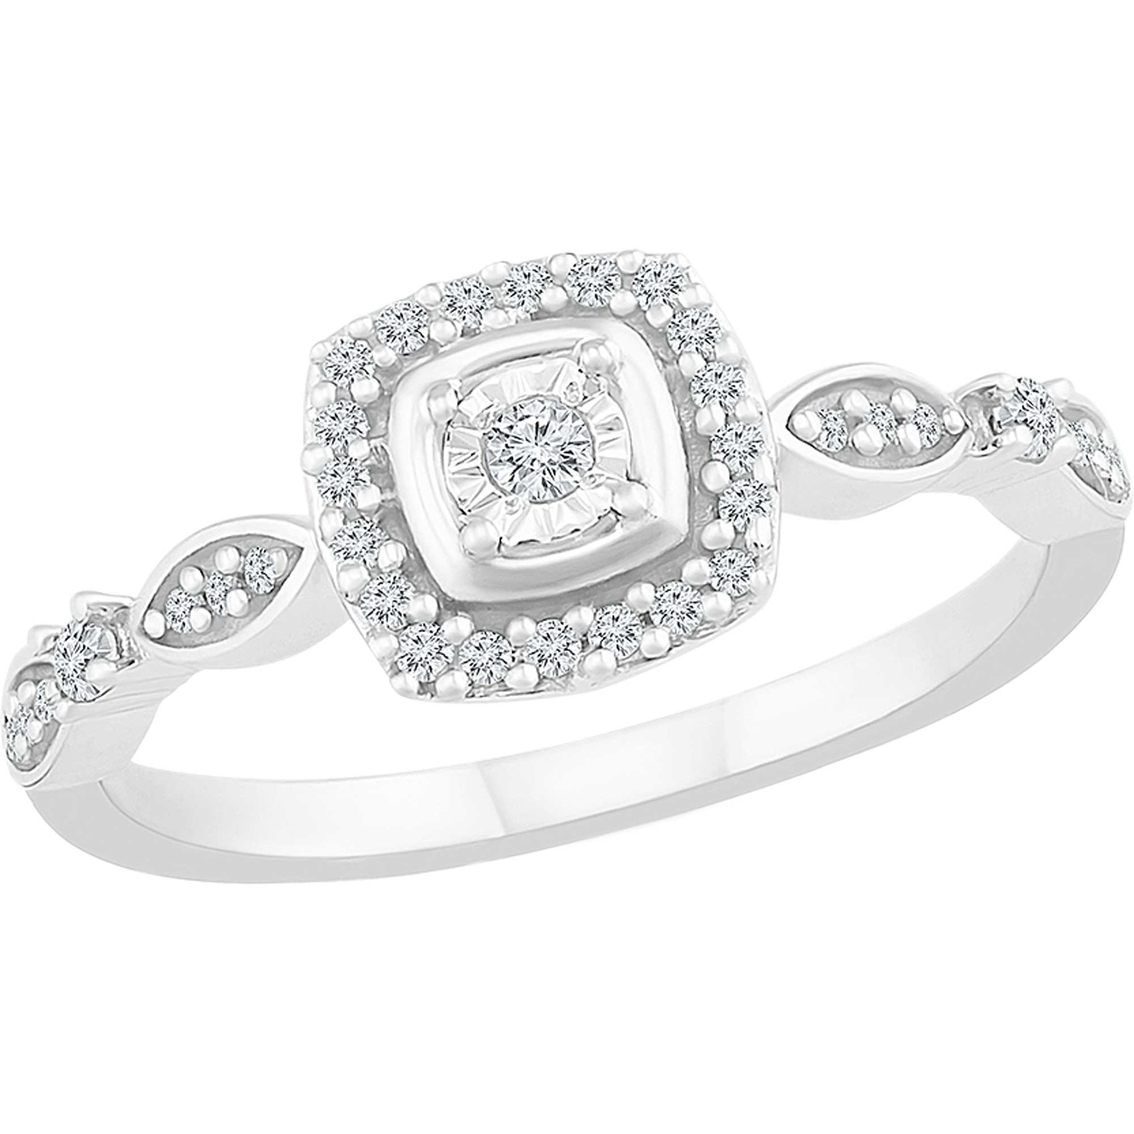 10K White Gold 1/6 CTW Diamond Promise Ring - Image 2 of 2